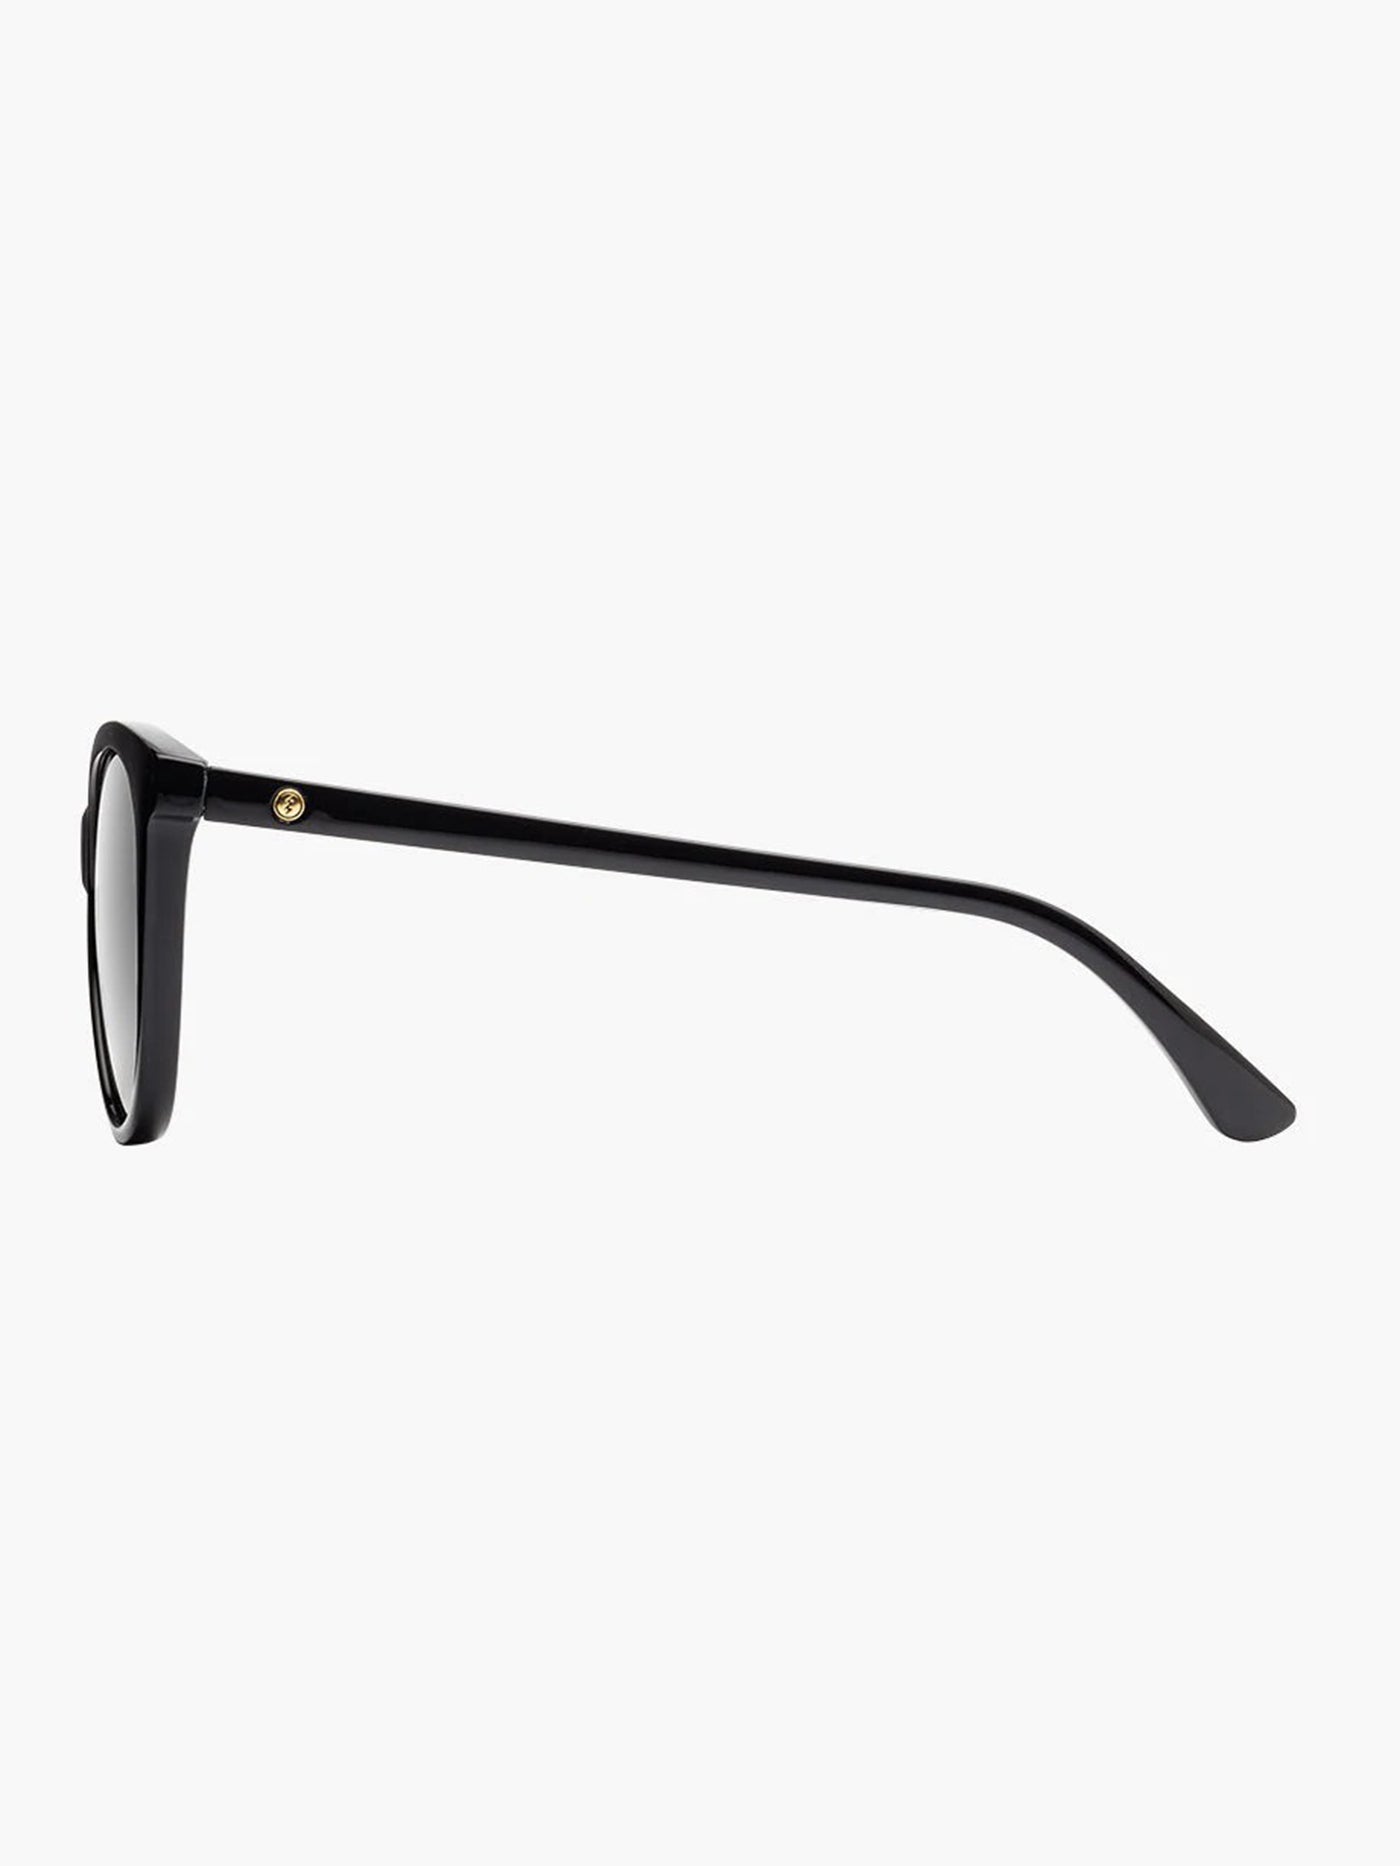 Electric Palm Gloss Black Sunglasses